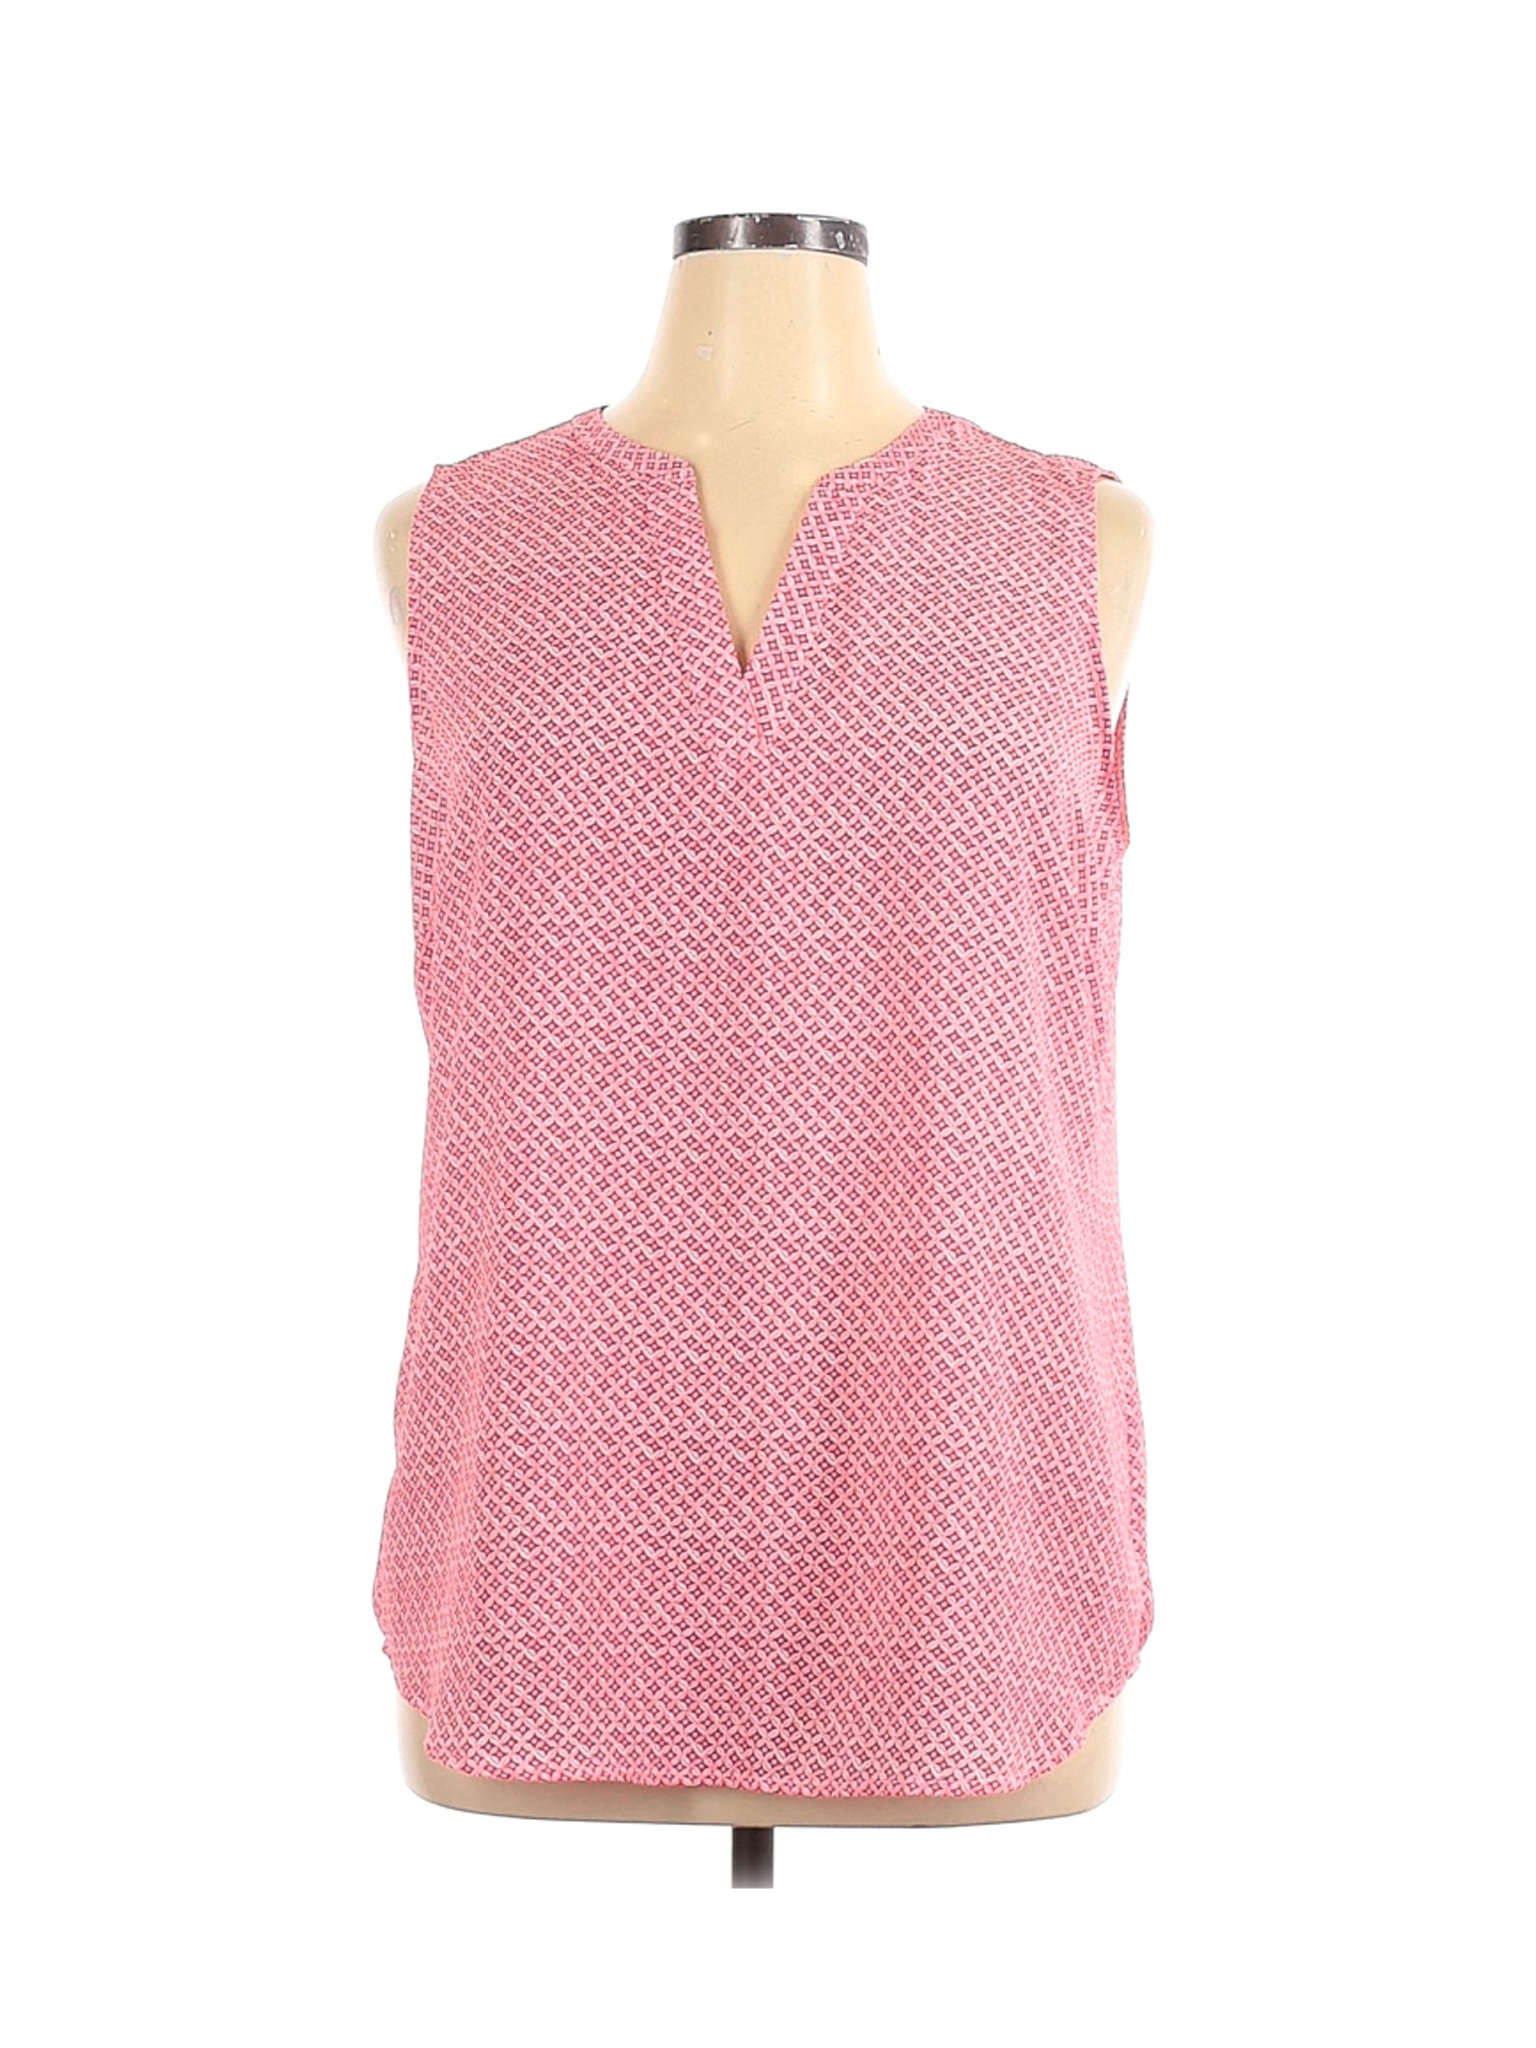 Adrianna Papell Women Pink Sleeveless Blouse XL | eBay